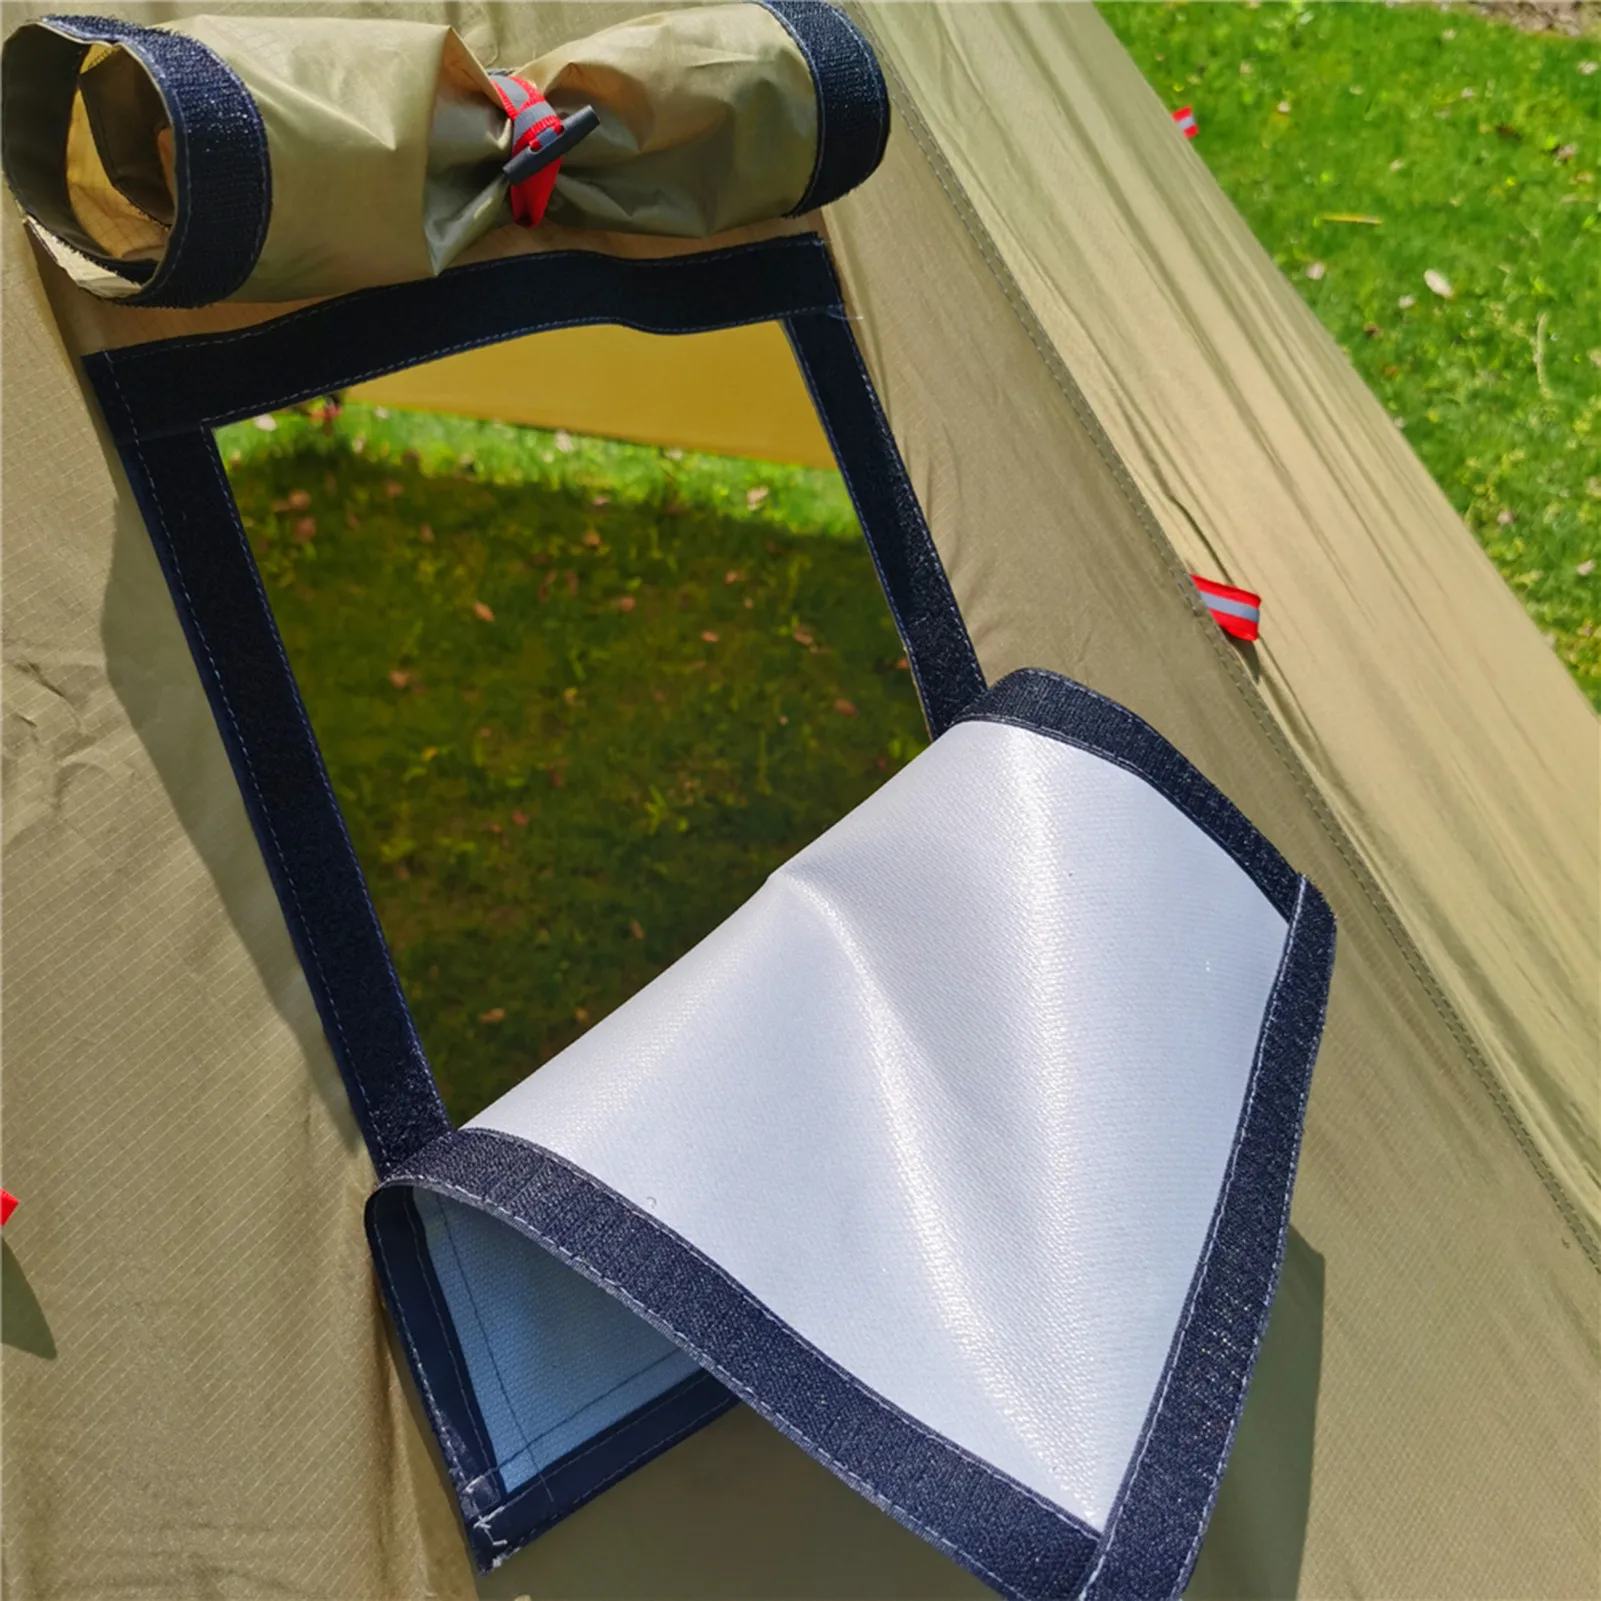 Hot Tent Stove Jack With Rain Flap Fireresistant Tent Stove Hole Jack Fireproof Stove Jack For Canvas Tipi Tent Tent Accessories